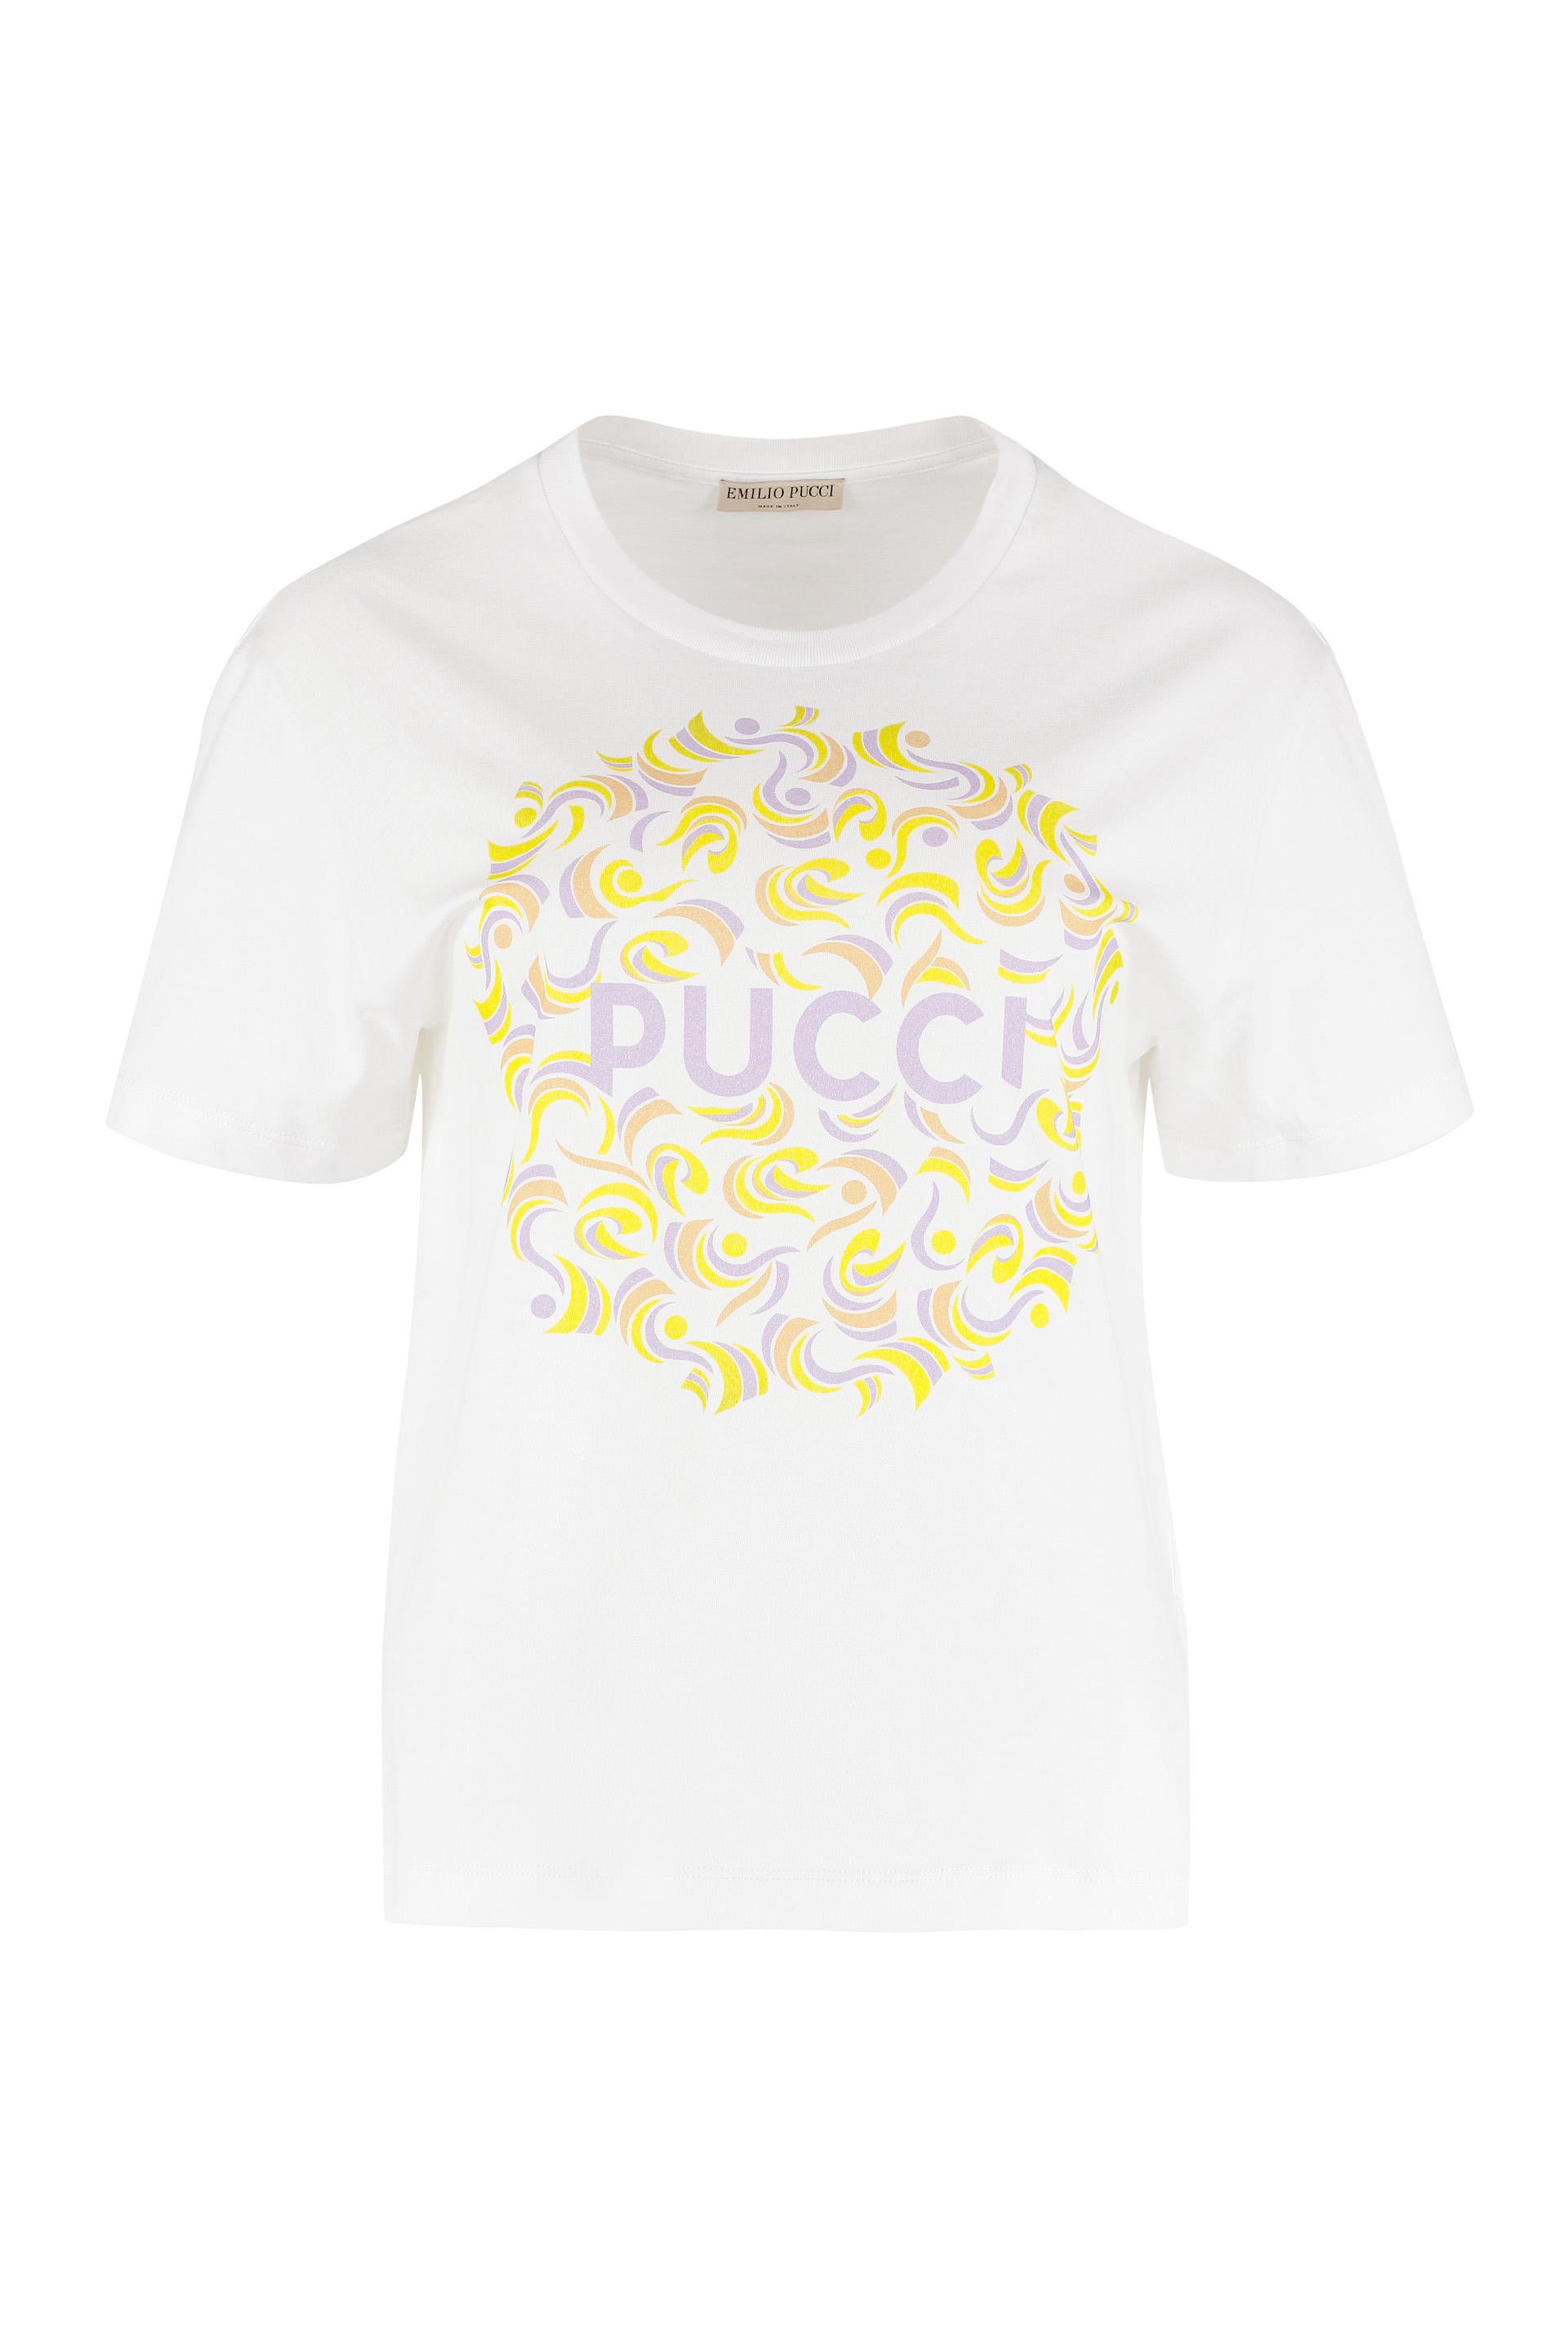 Emilio Pucci Logo Cotton T-shirt in White | Lyst